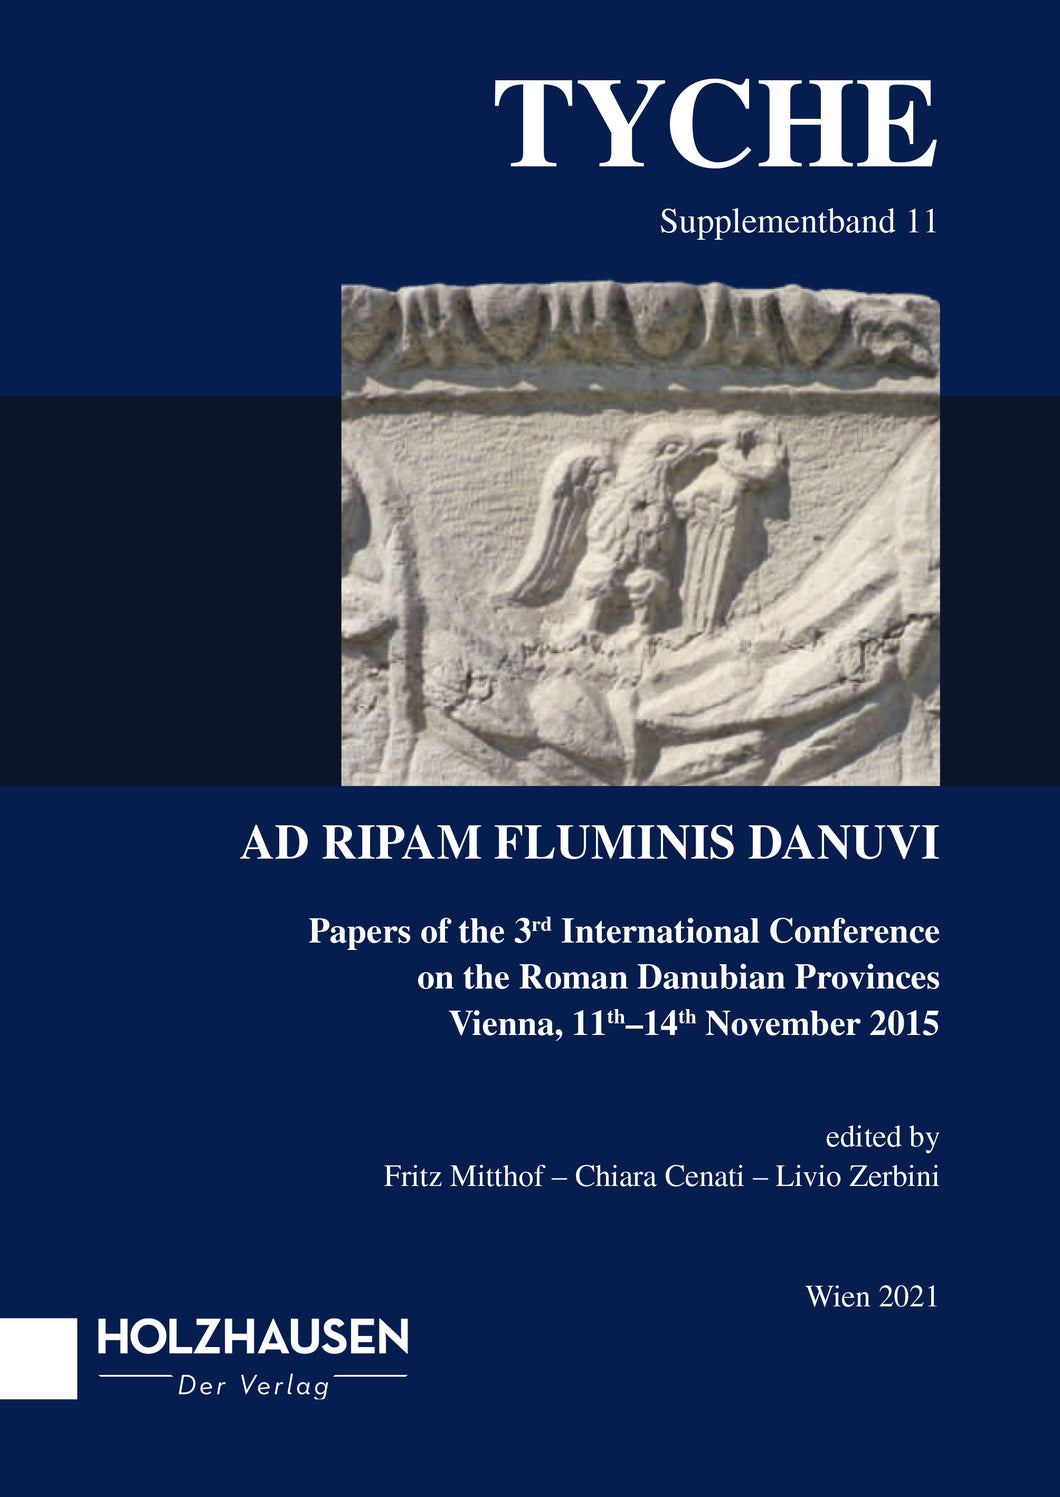 Tyche Supplementband 11 | AD RIPAM FLUMINIS DANUVI